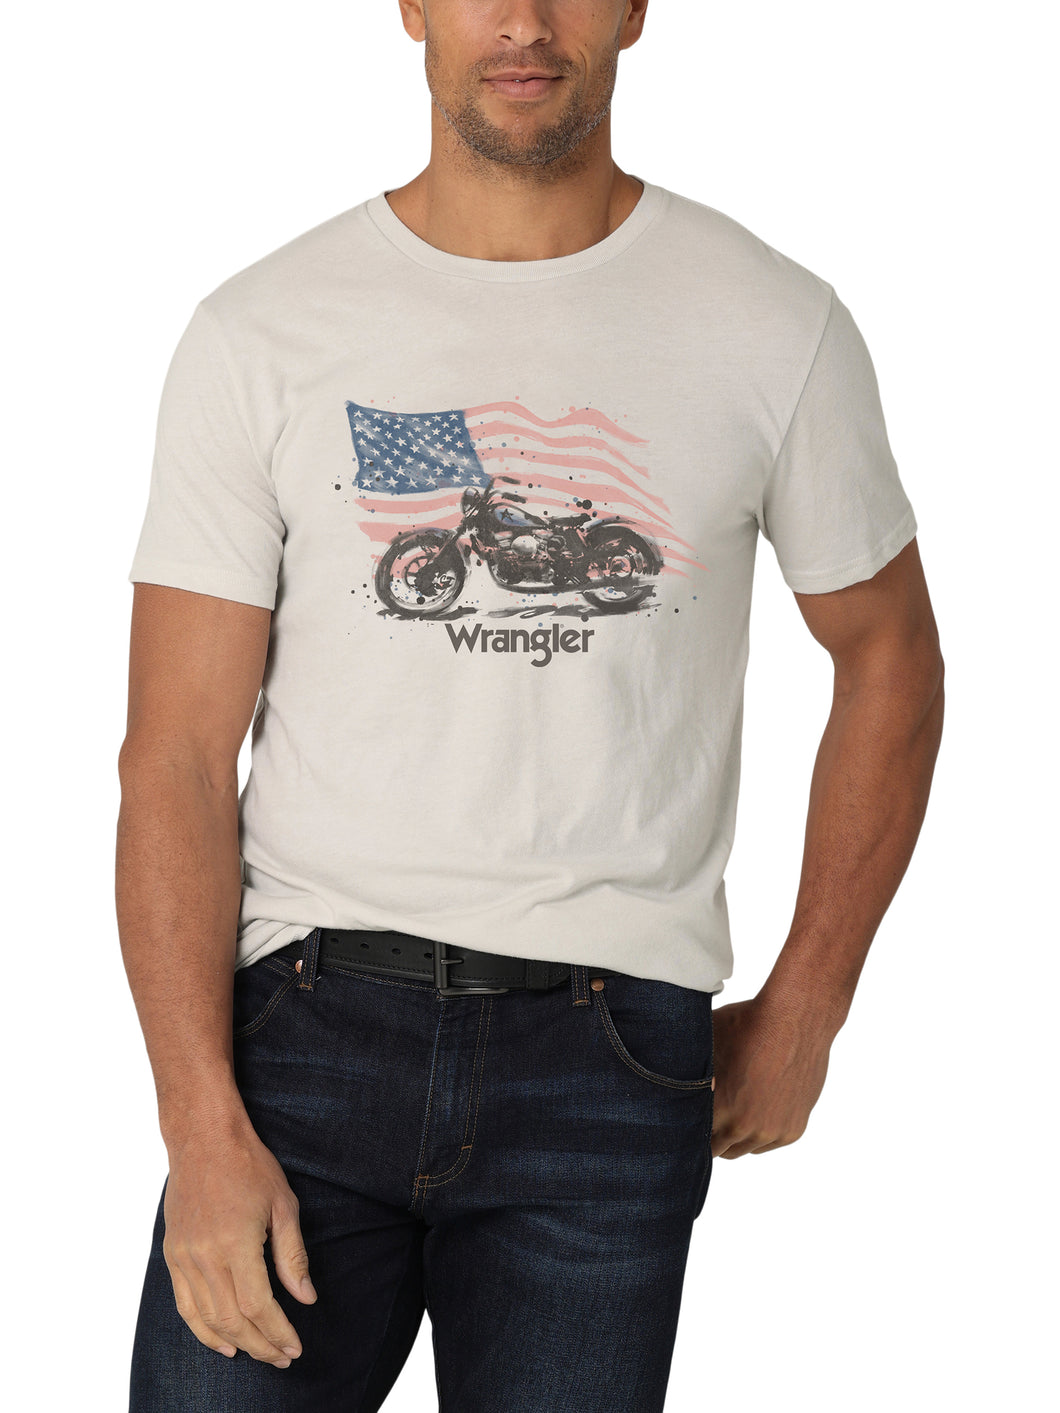 Pard's Western shop Wrangler Moto American Flag T-Shirt for Men